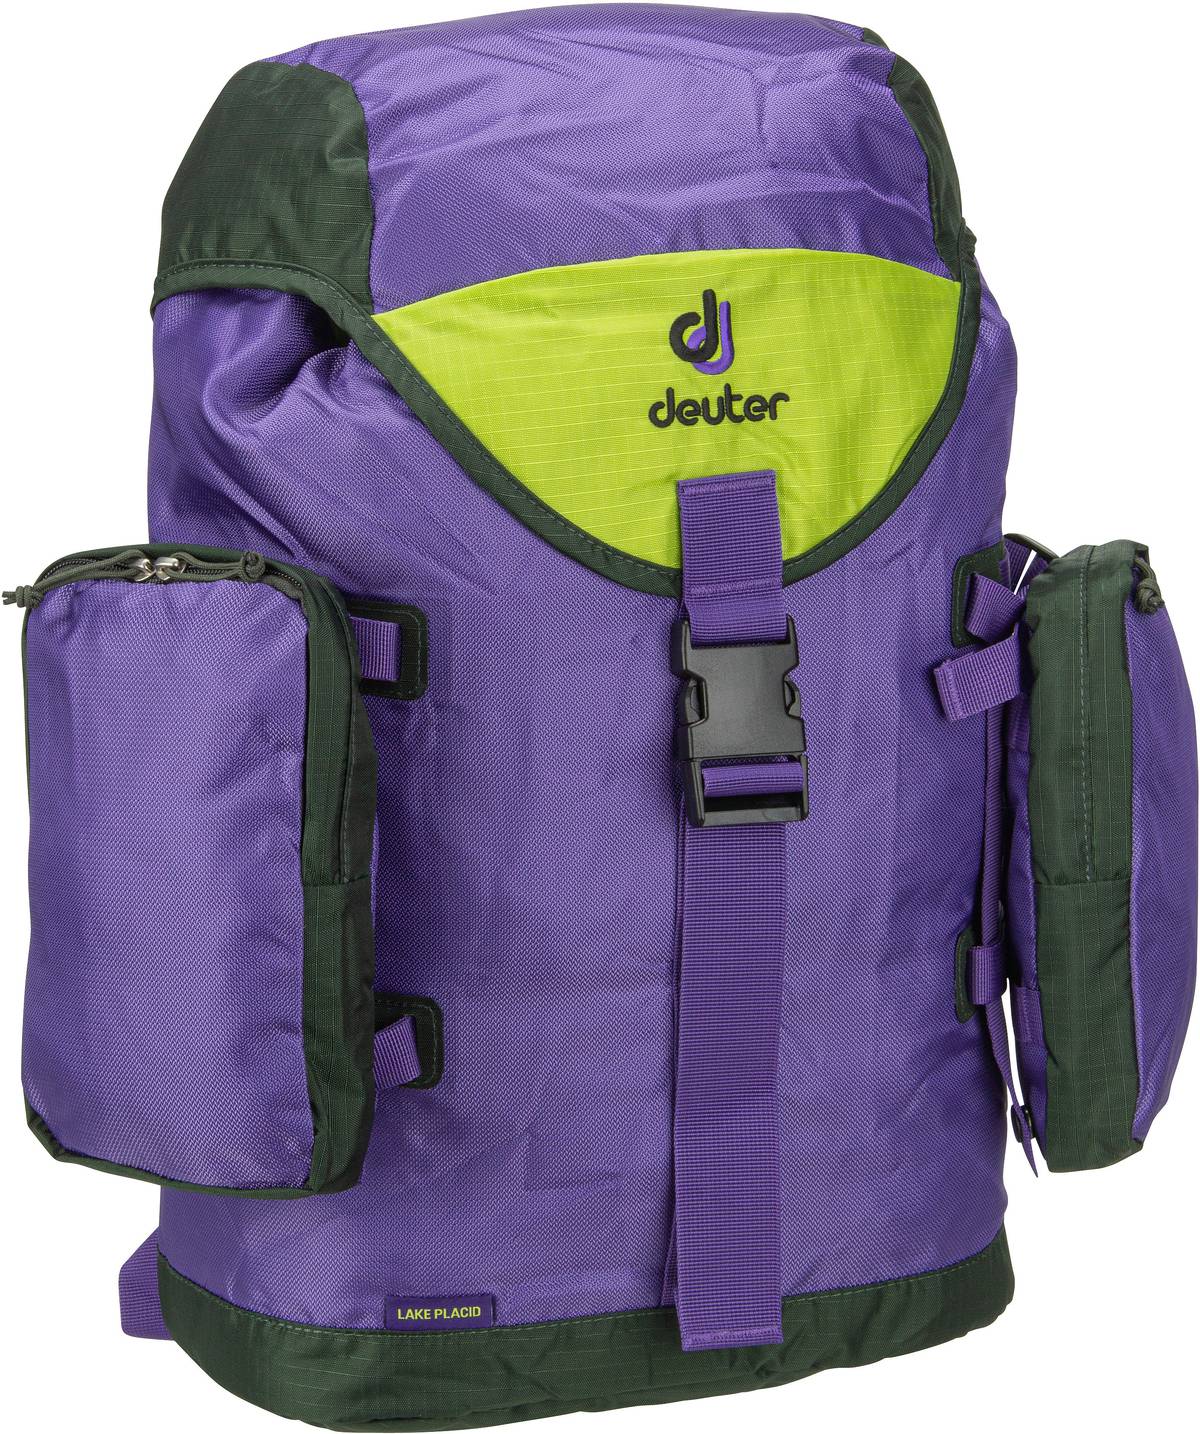 Deuter Deuter Lake Placid in Violett (27 Liter), Rucksack / Backpack